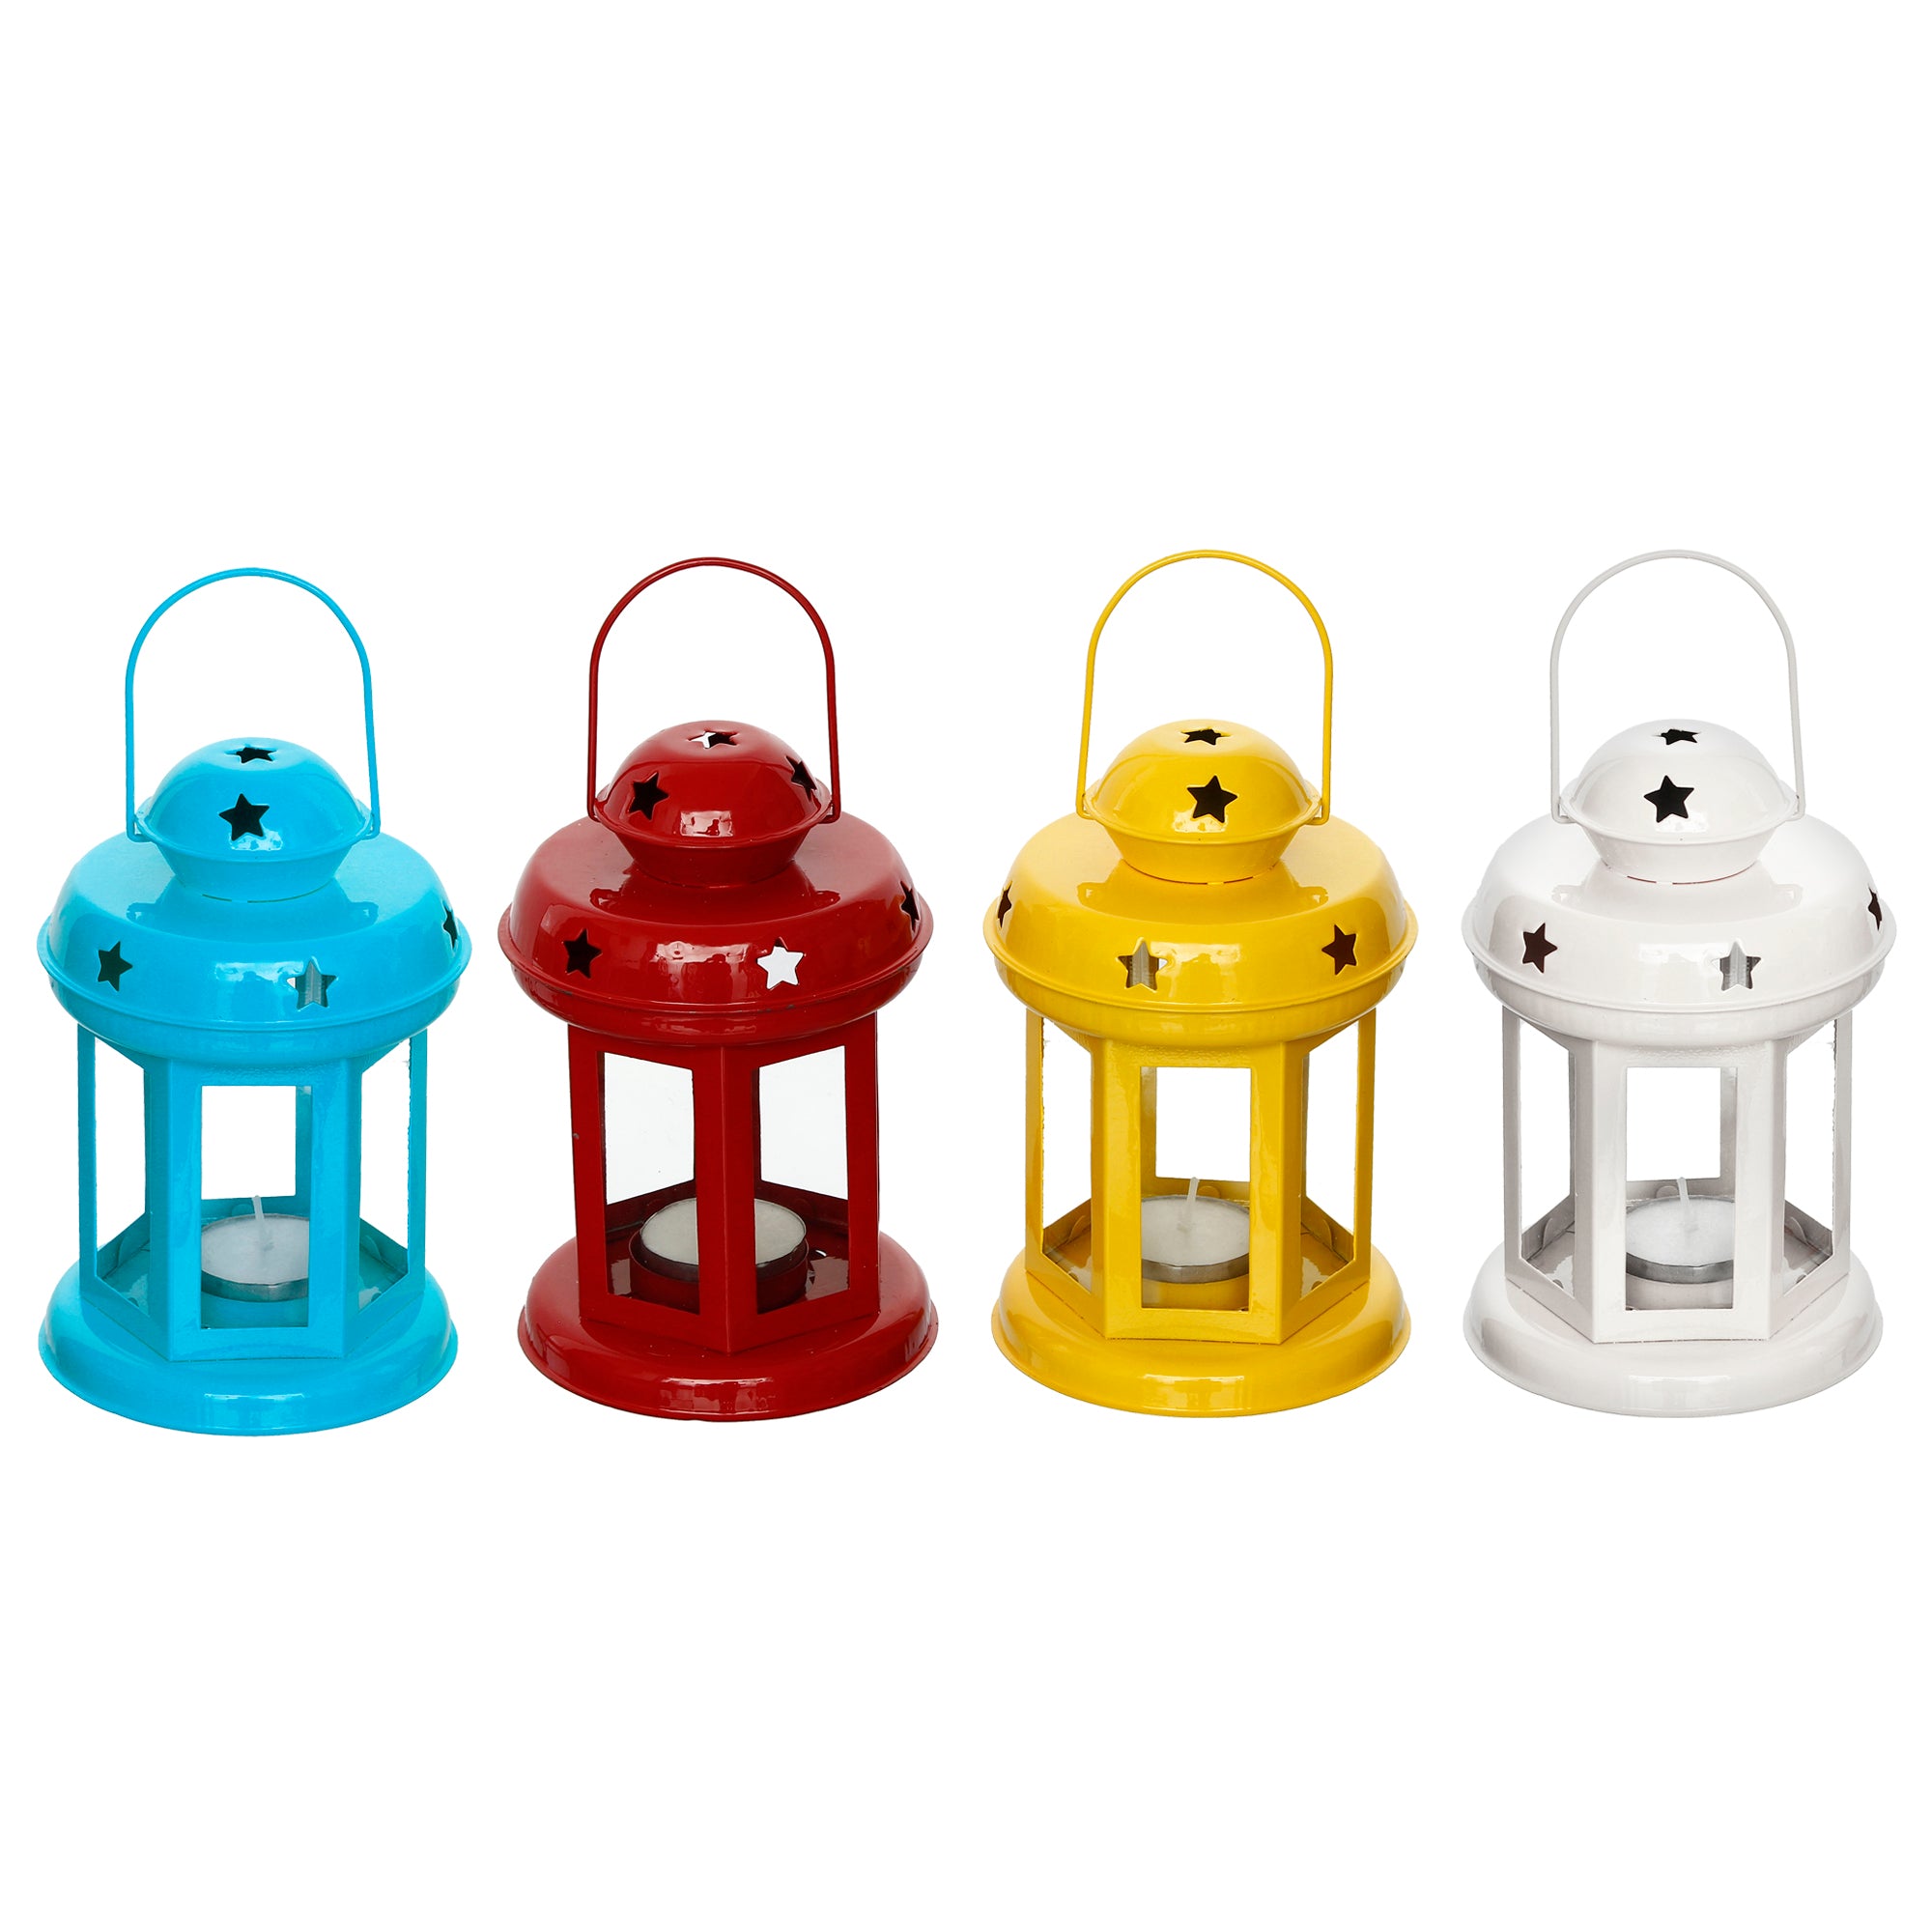 Iron Set of 4 tea light candle holder Lantern(Blue, Yellow, Red, White) 2